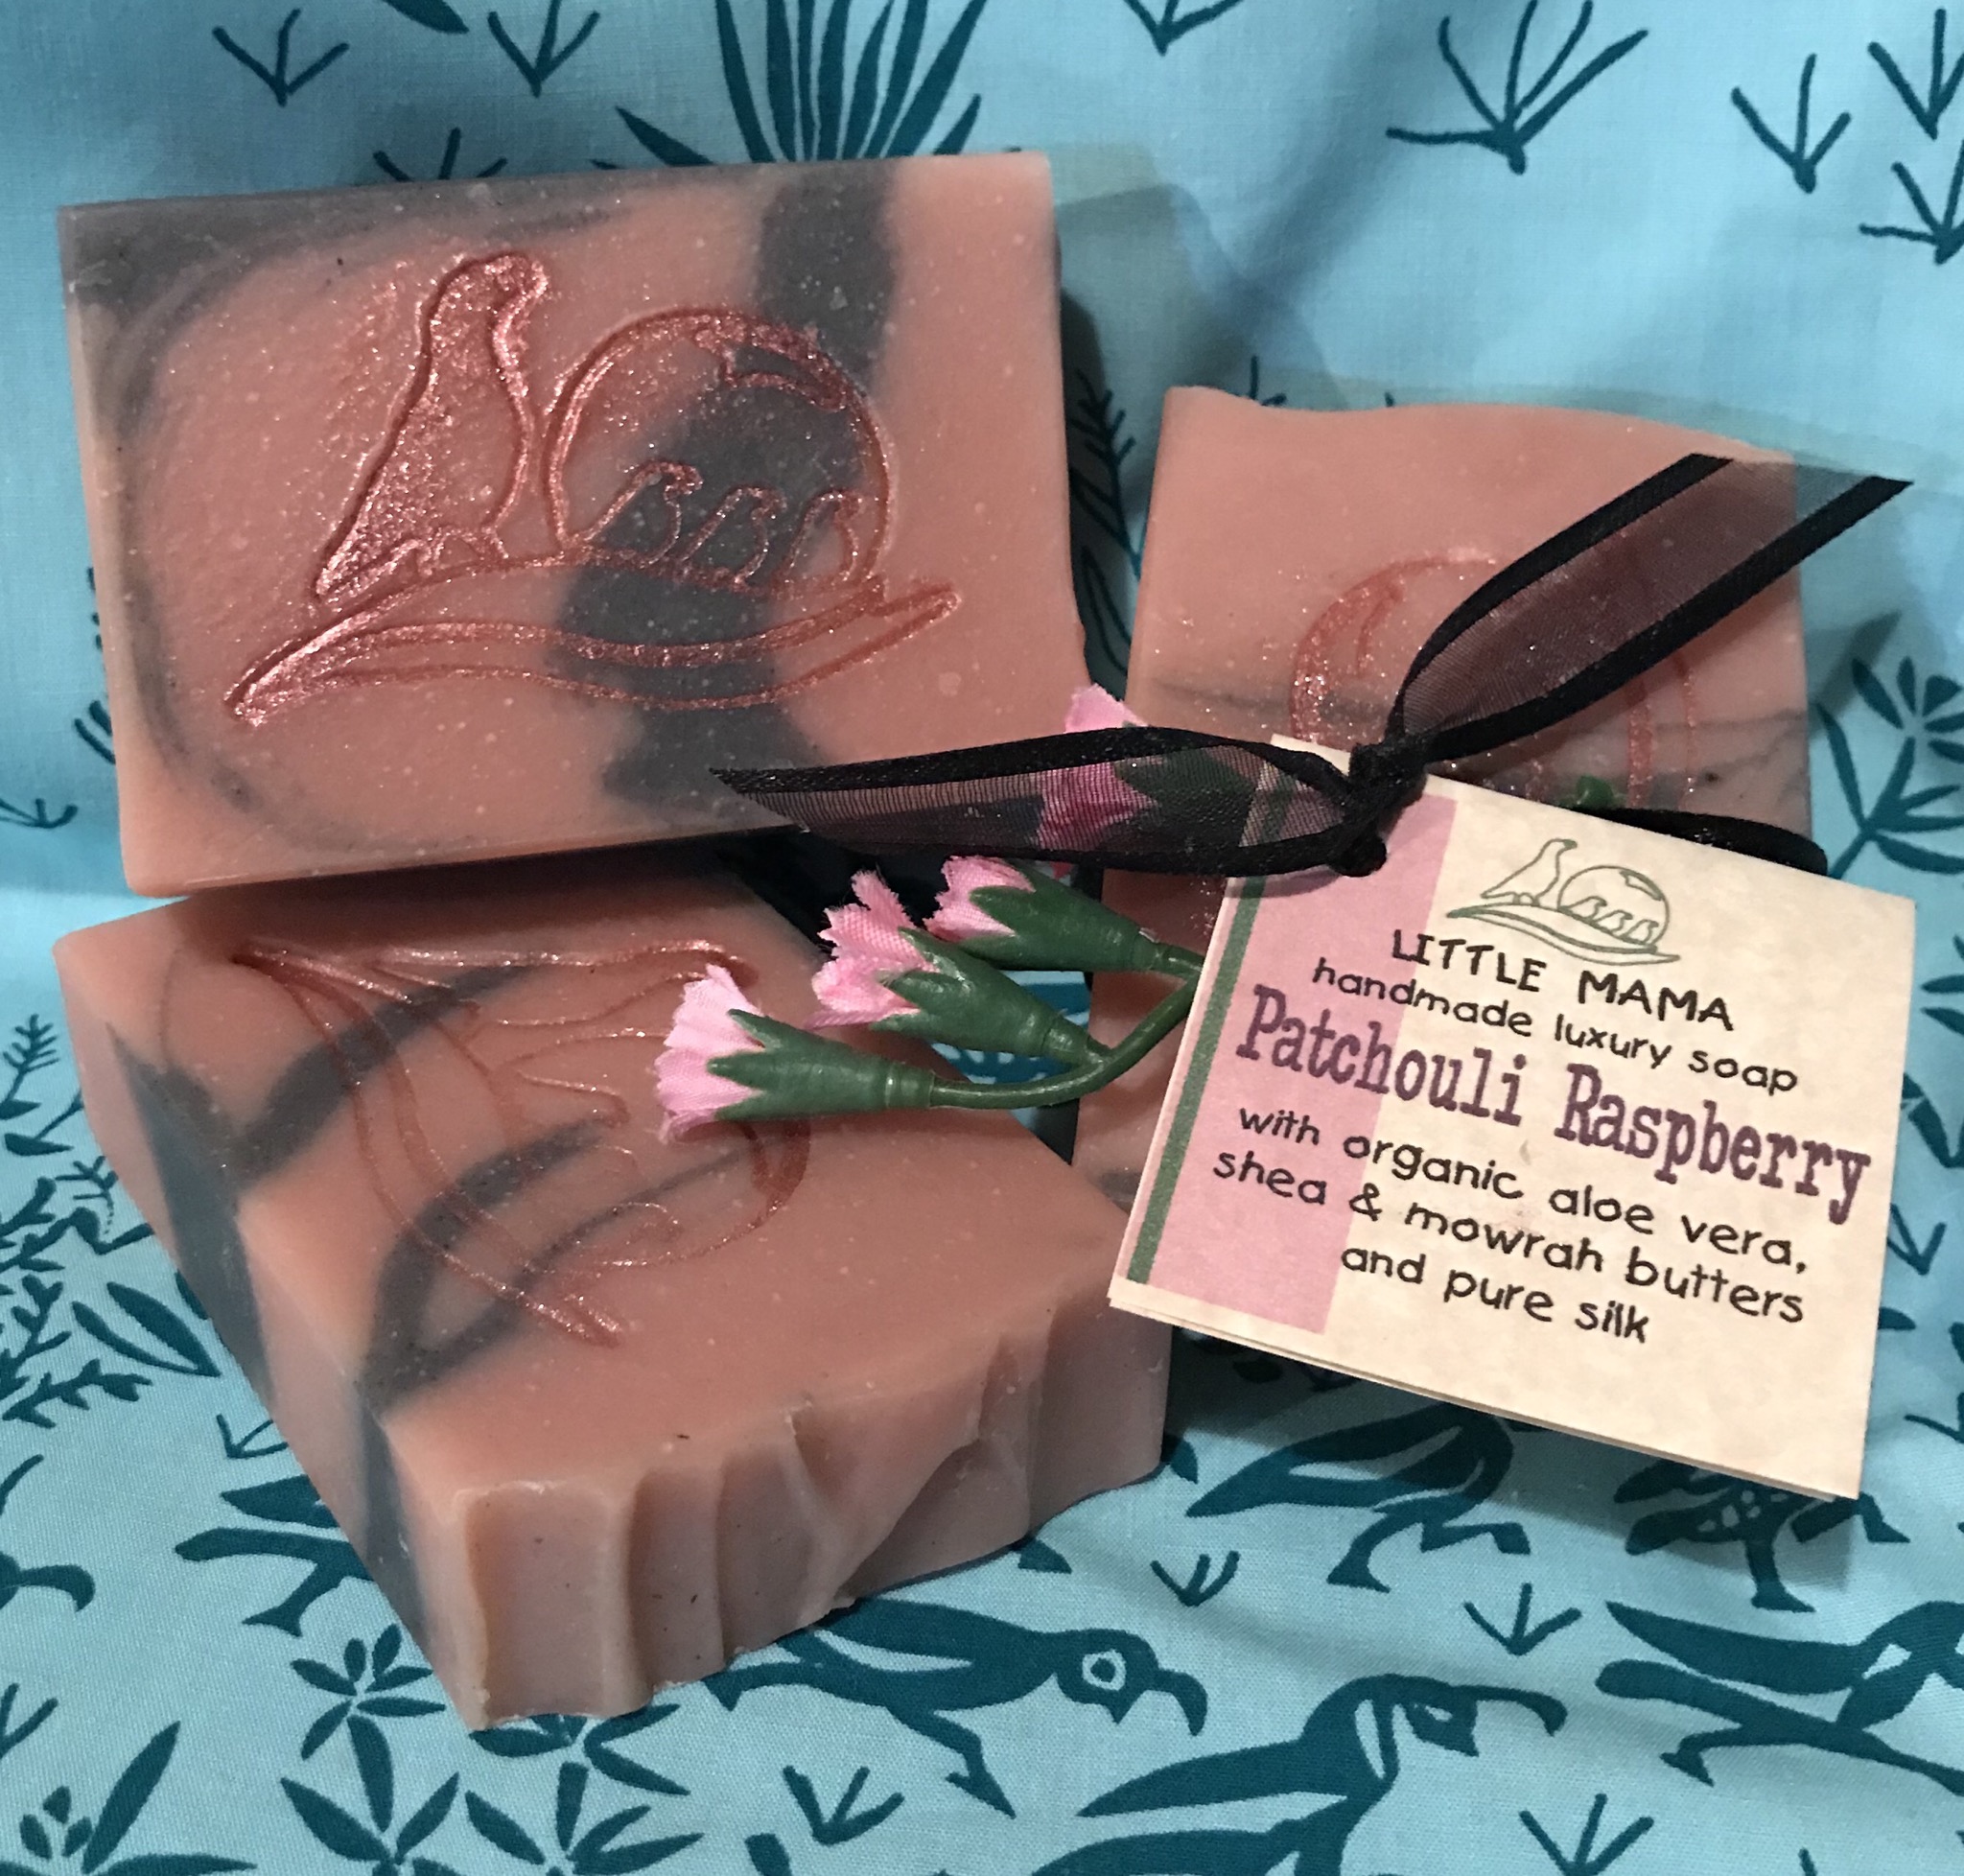 Patchouli Raspberry Soap